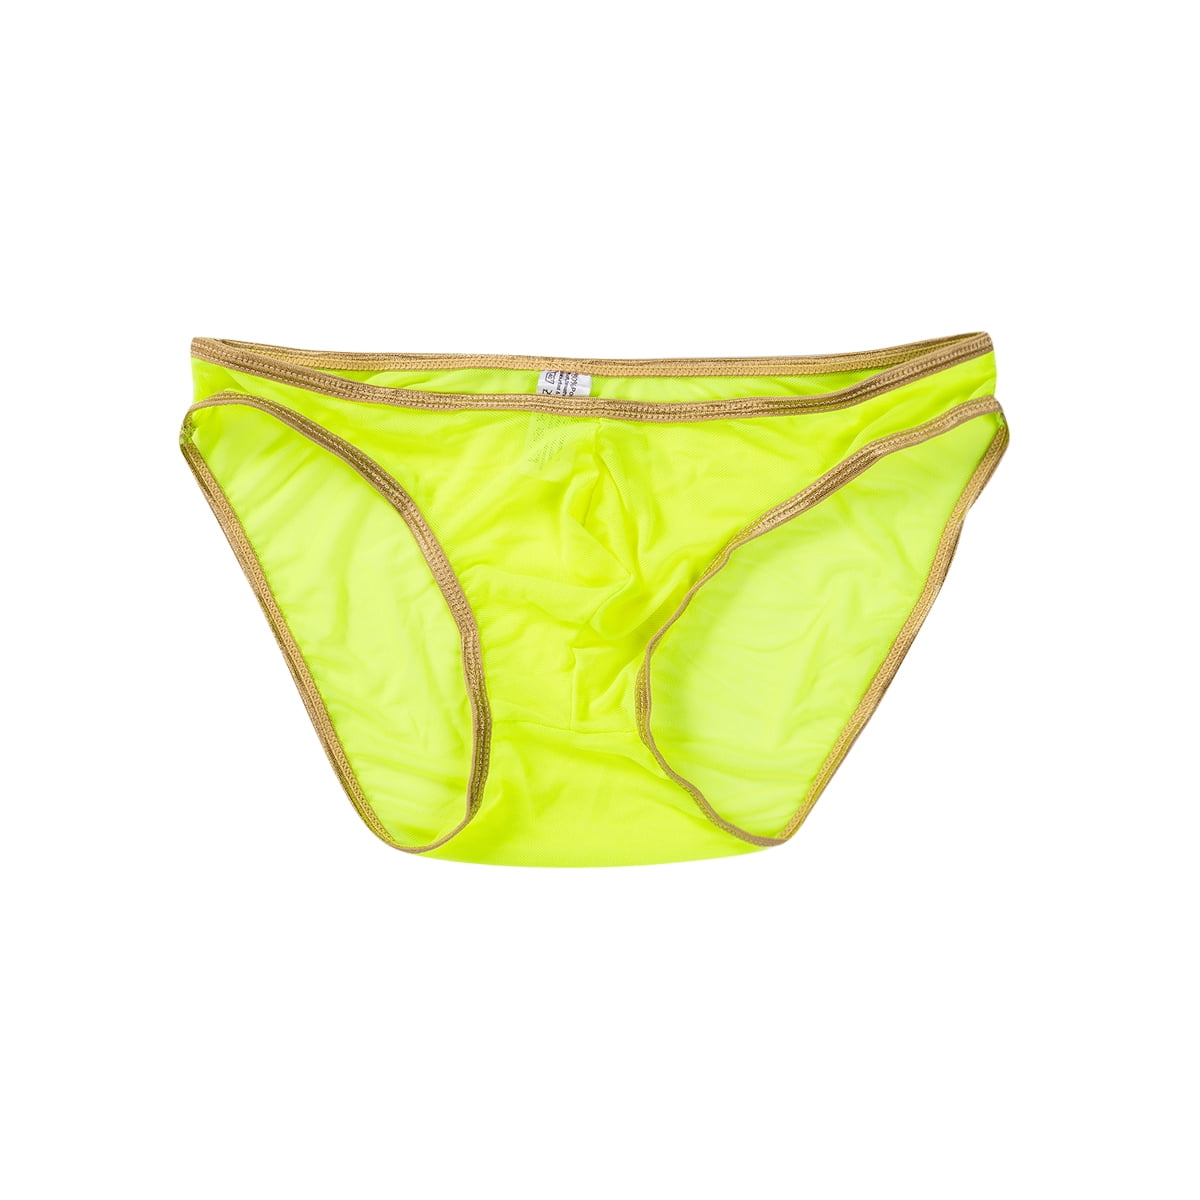 Mens See-through Briefs Sexy Sheer Underwear Panties Lingerie - Walmart.com